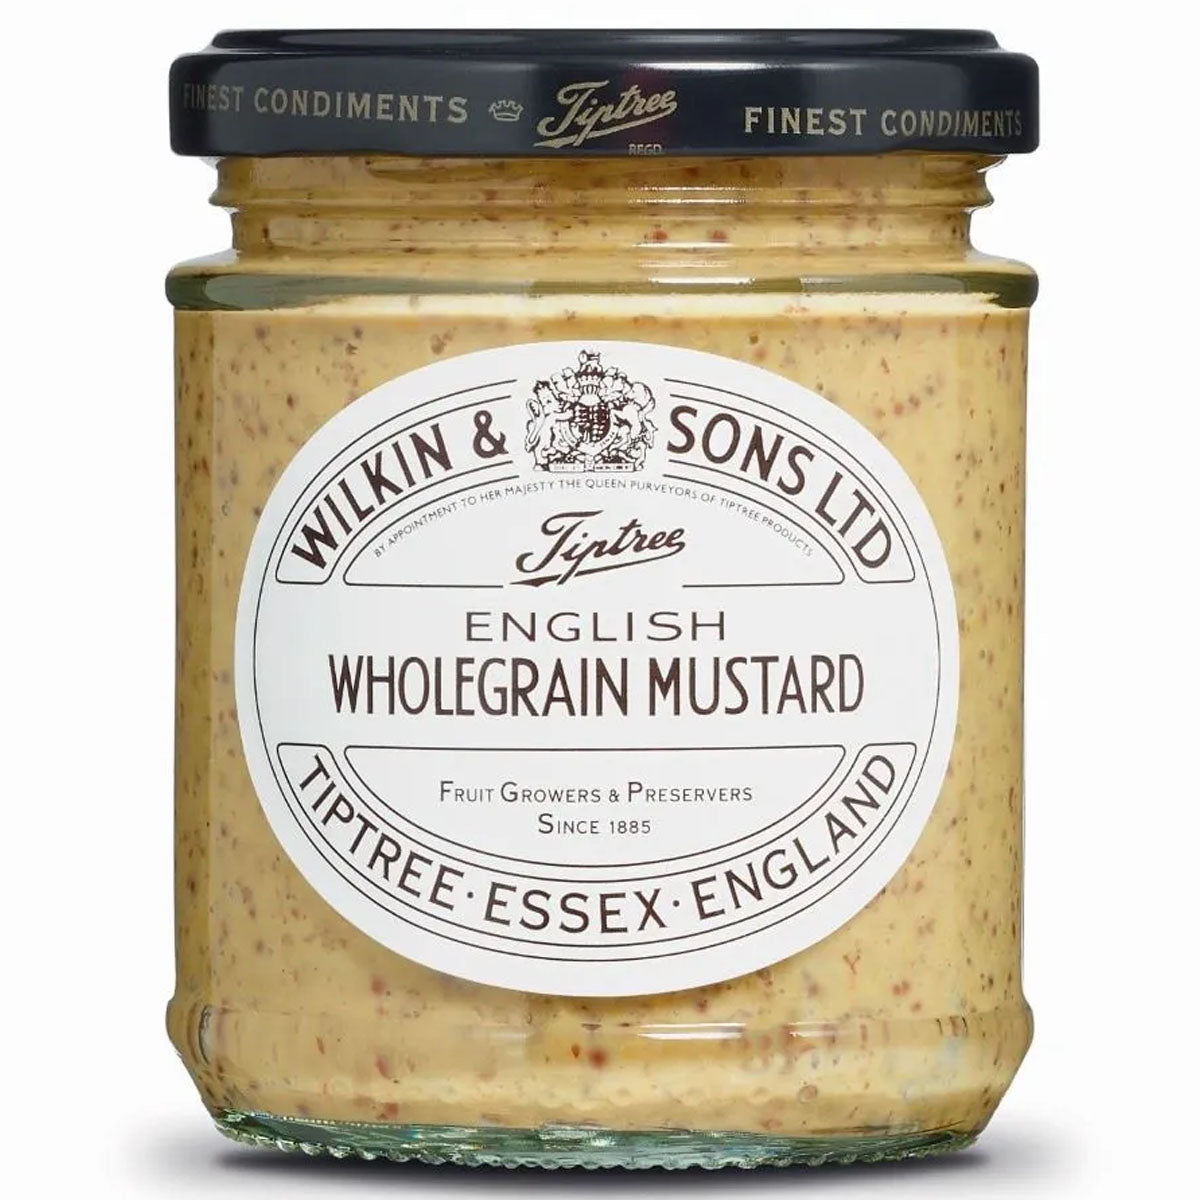 Wilkin & Son's - Tiptree English Wholegrain Mustard - 185g - Continental Food Store